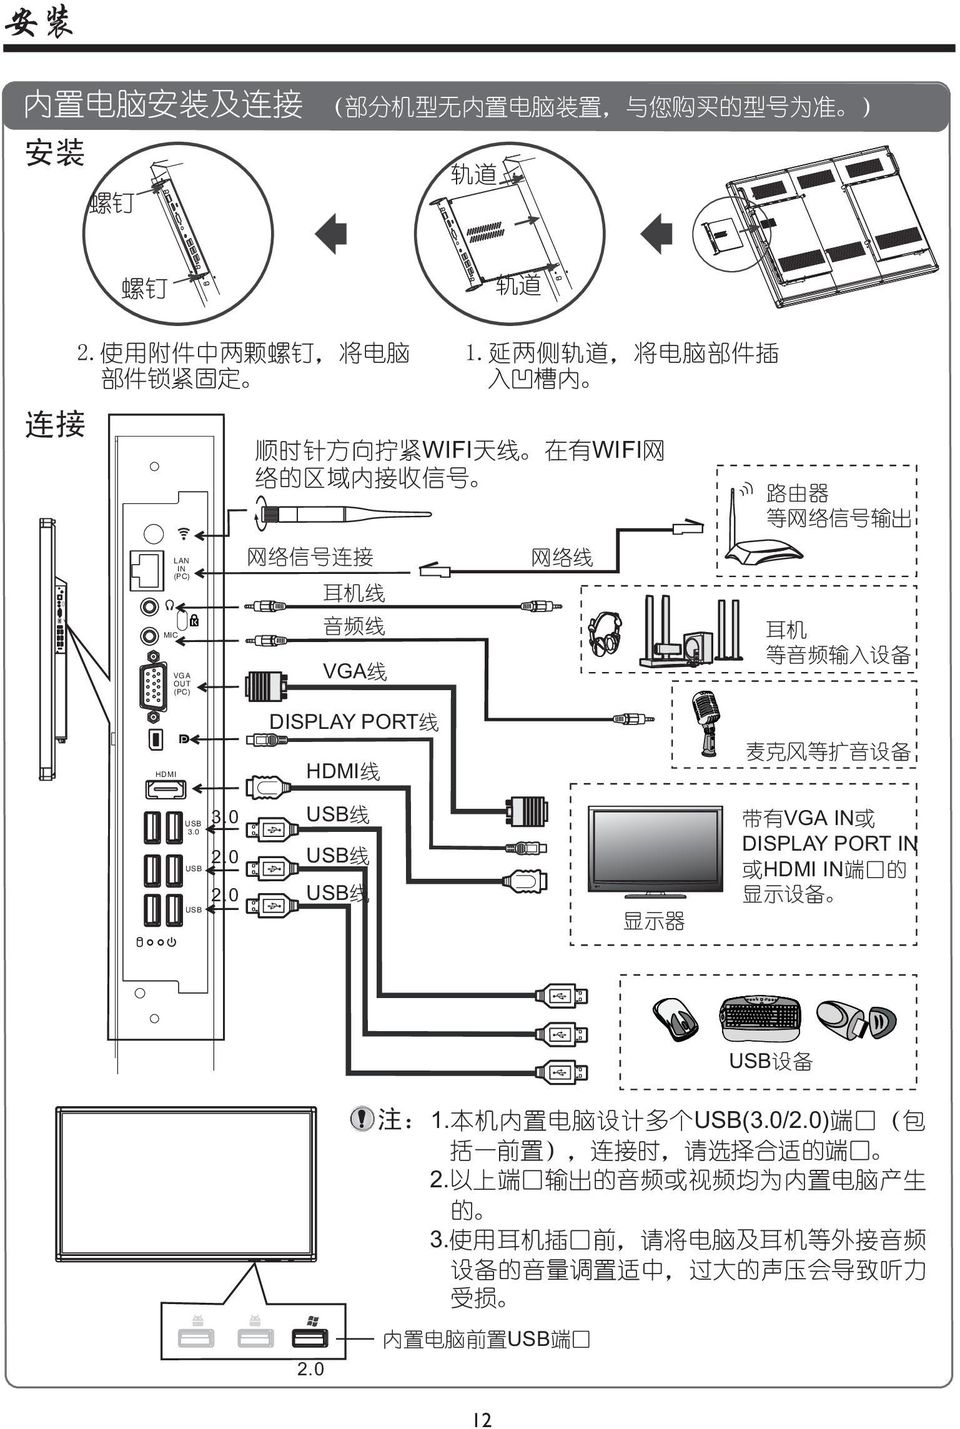 OUT (PC) DISPLAY PORT线 麦克风等扩音设备 HDMI线 HDMI USB 3.0 USB 3.0 USB线 2.